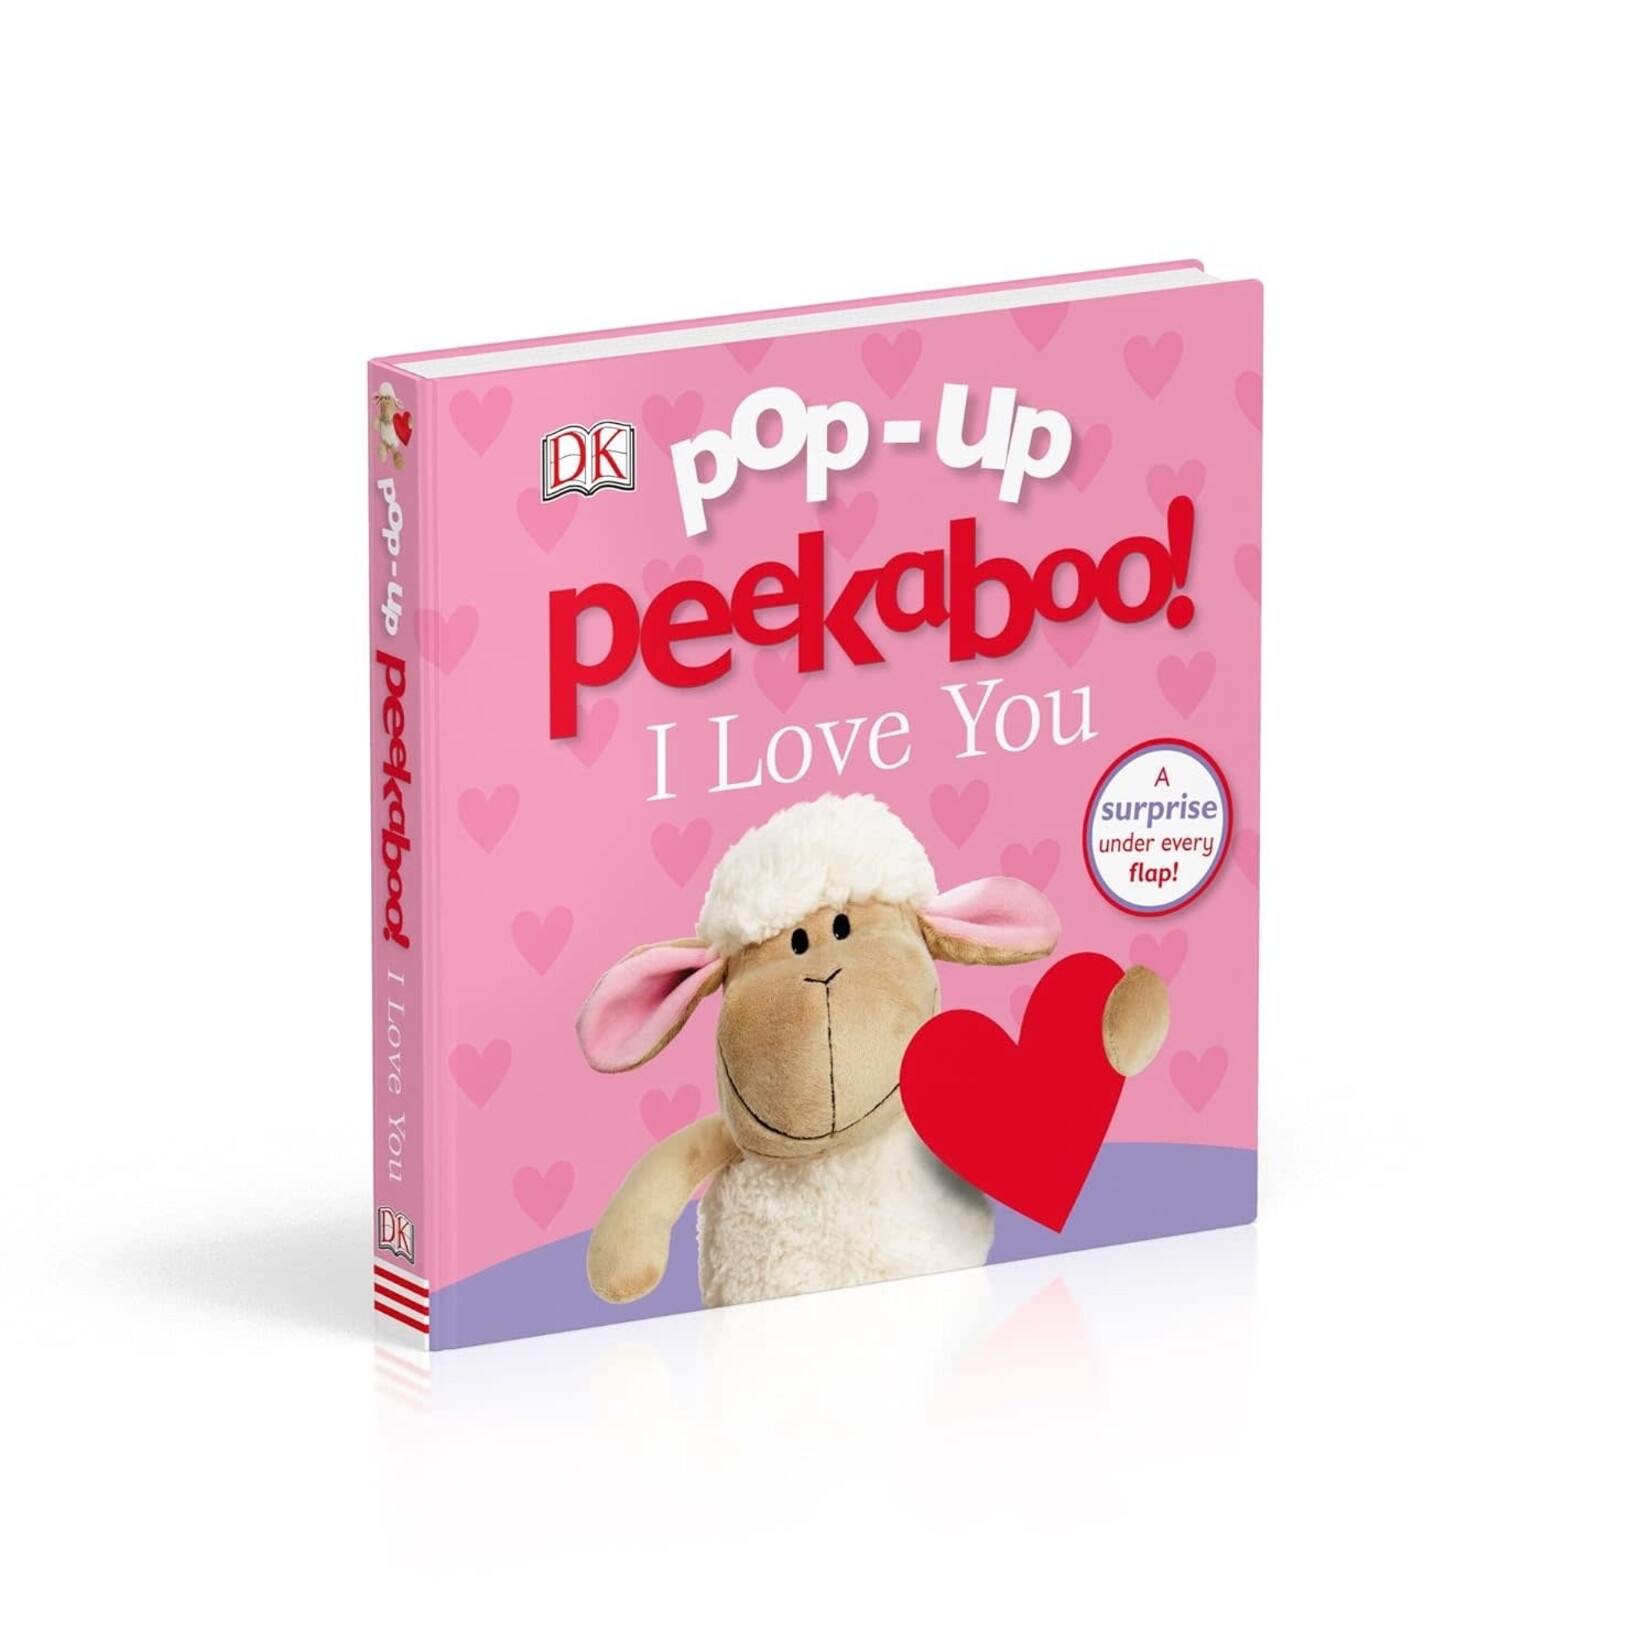 Pop-up Peekaboo! I Love You